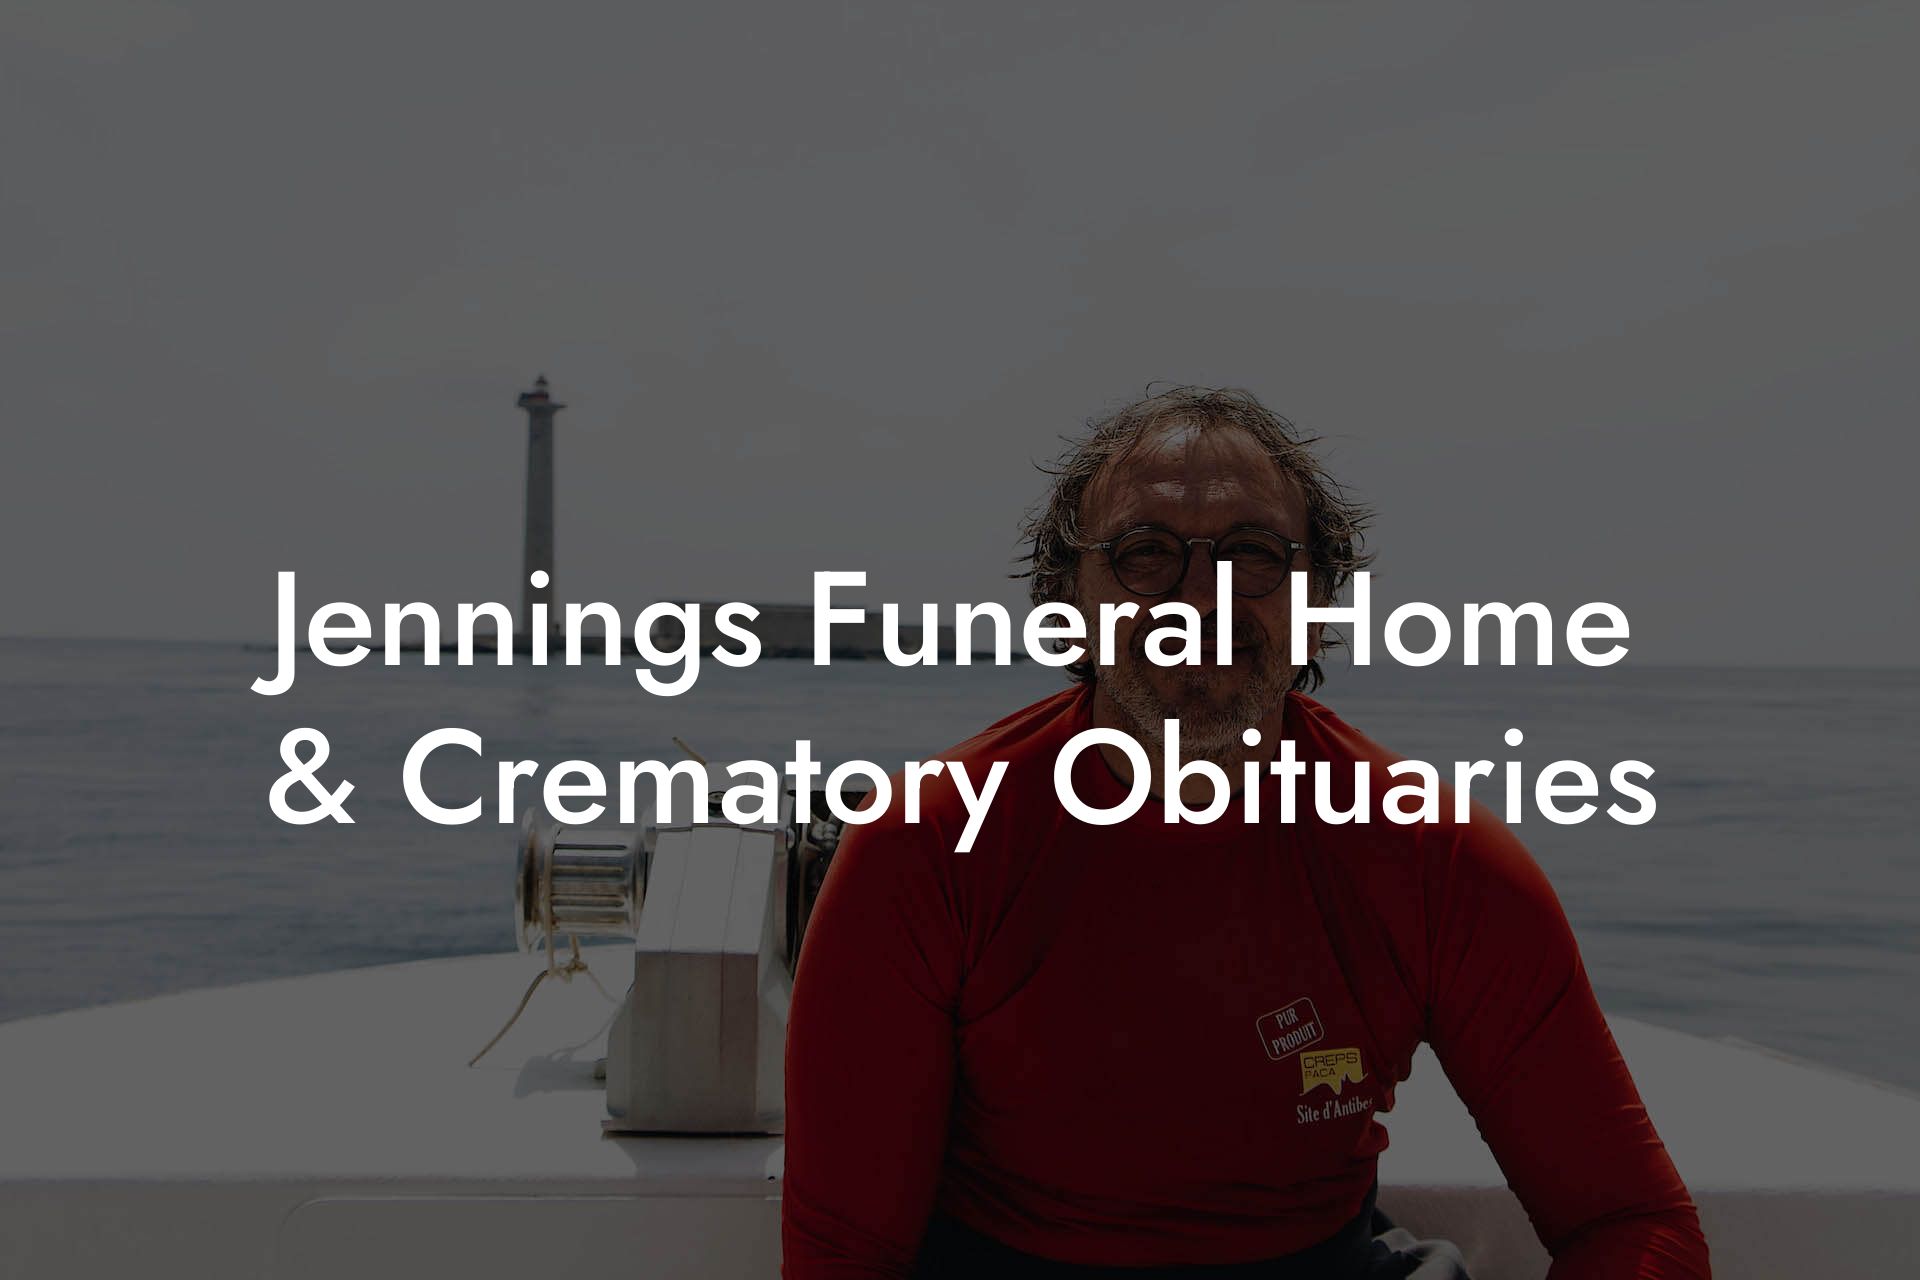 Jennings Funeral Home & Crematory Obituaries